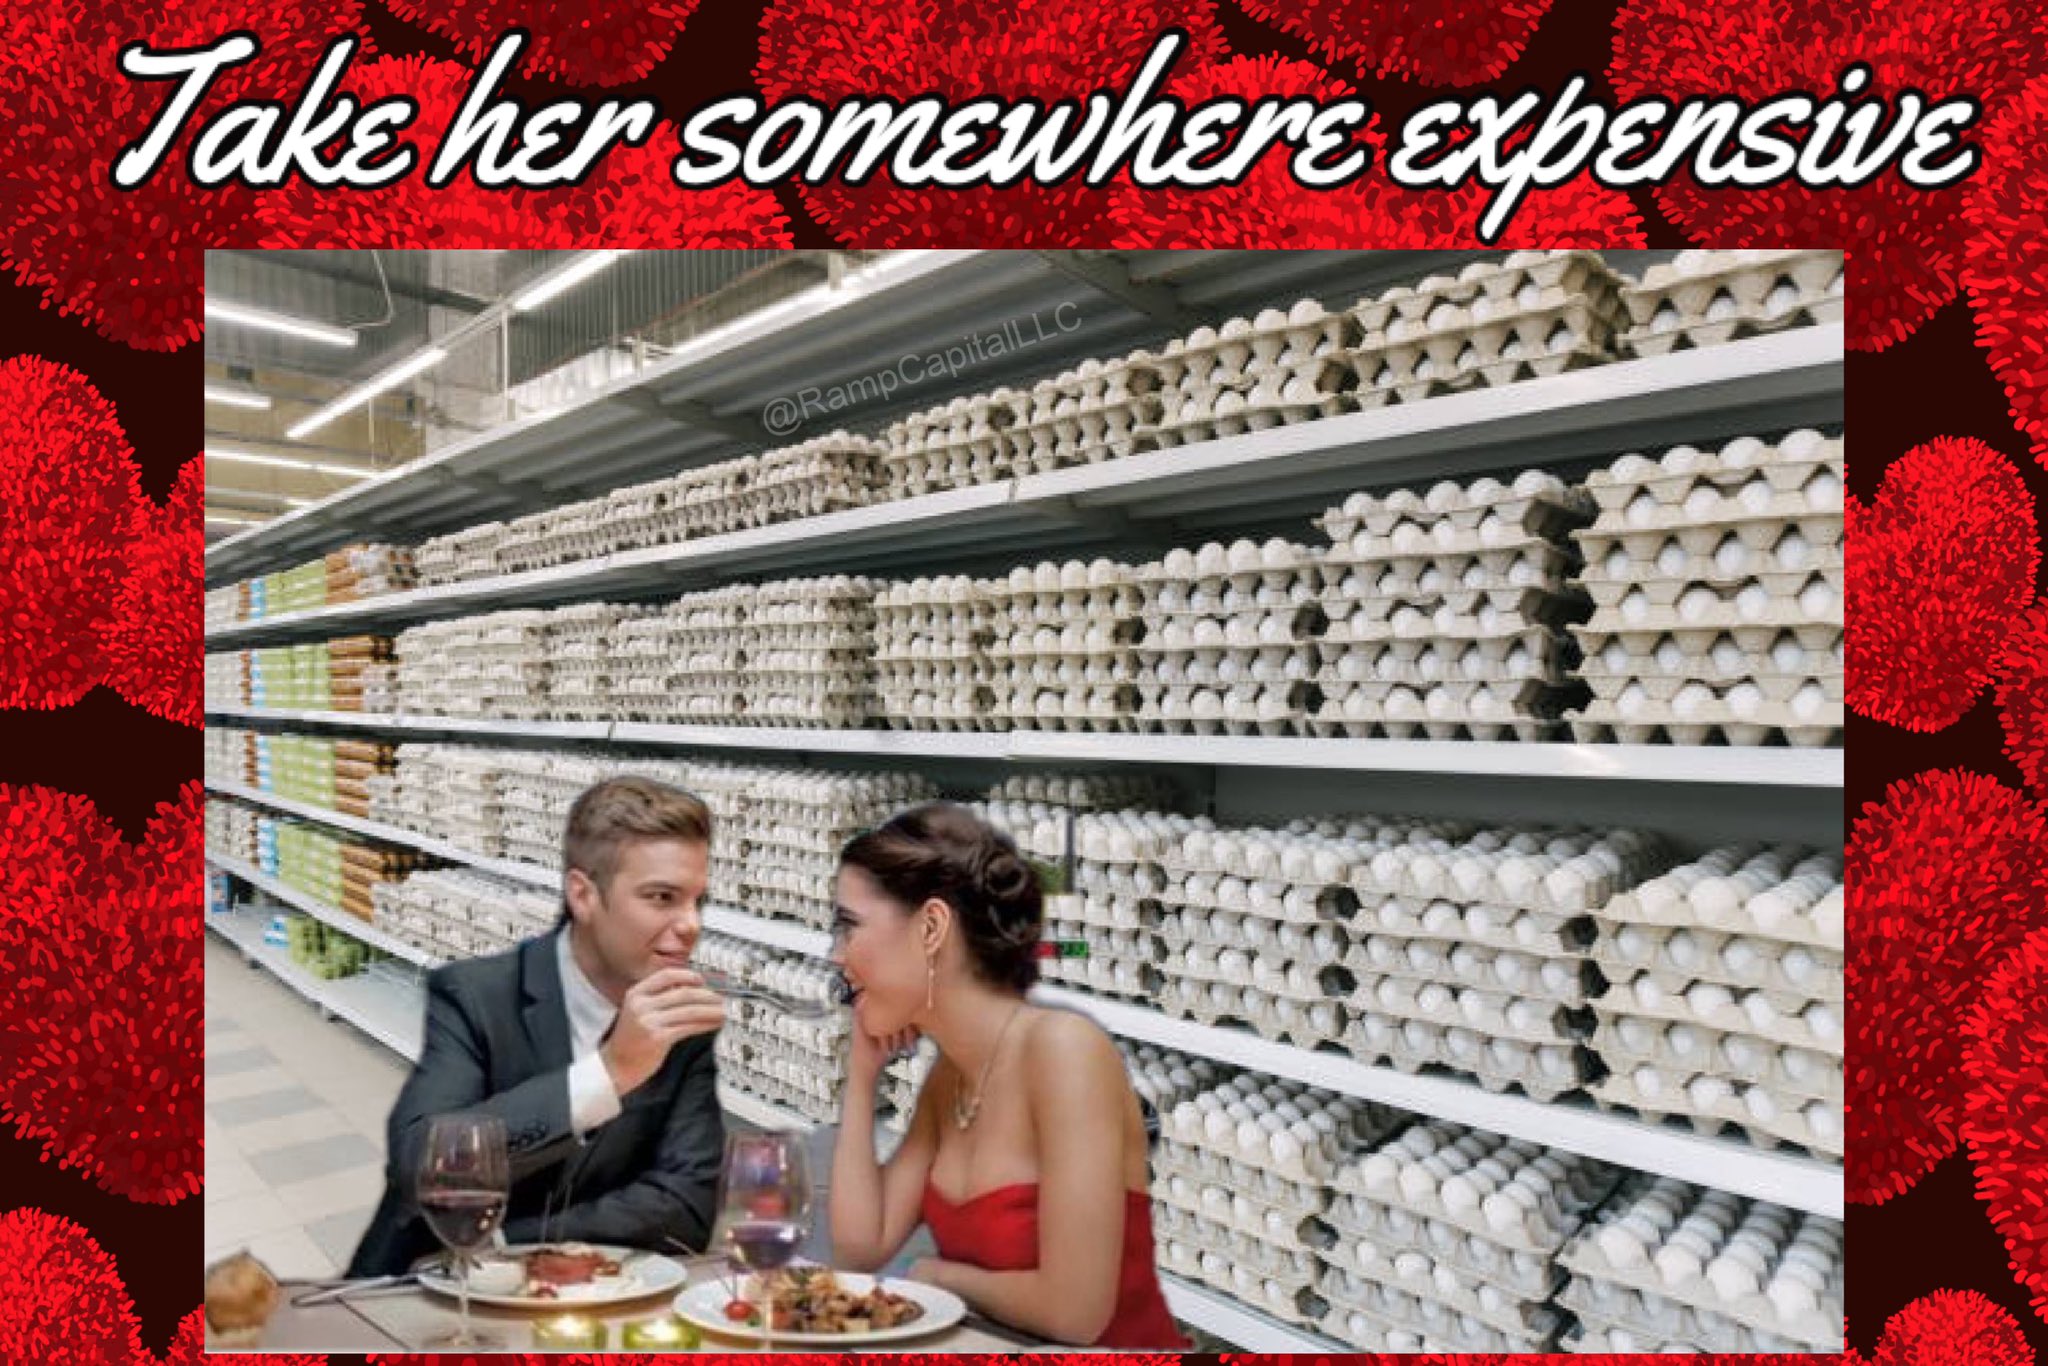 Egg Shortage 2023 memes - Take her somewhere expensive